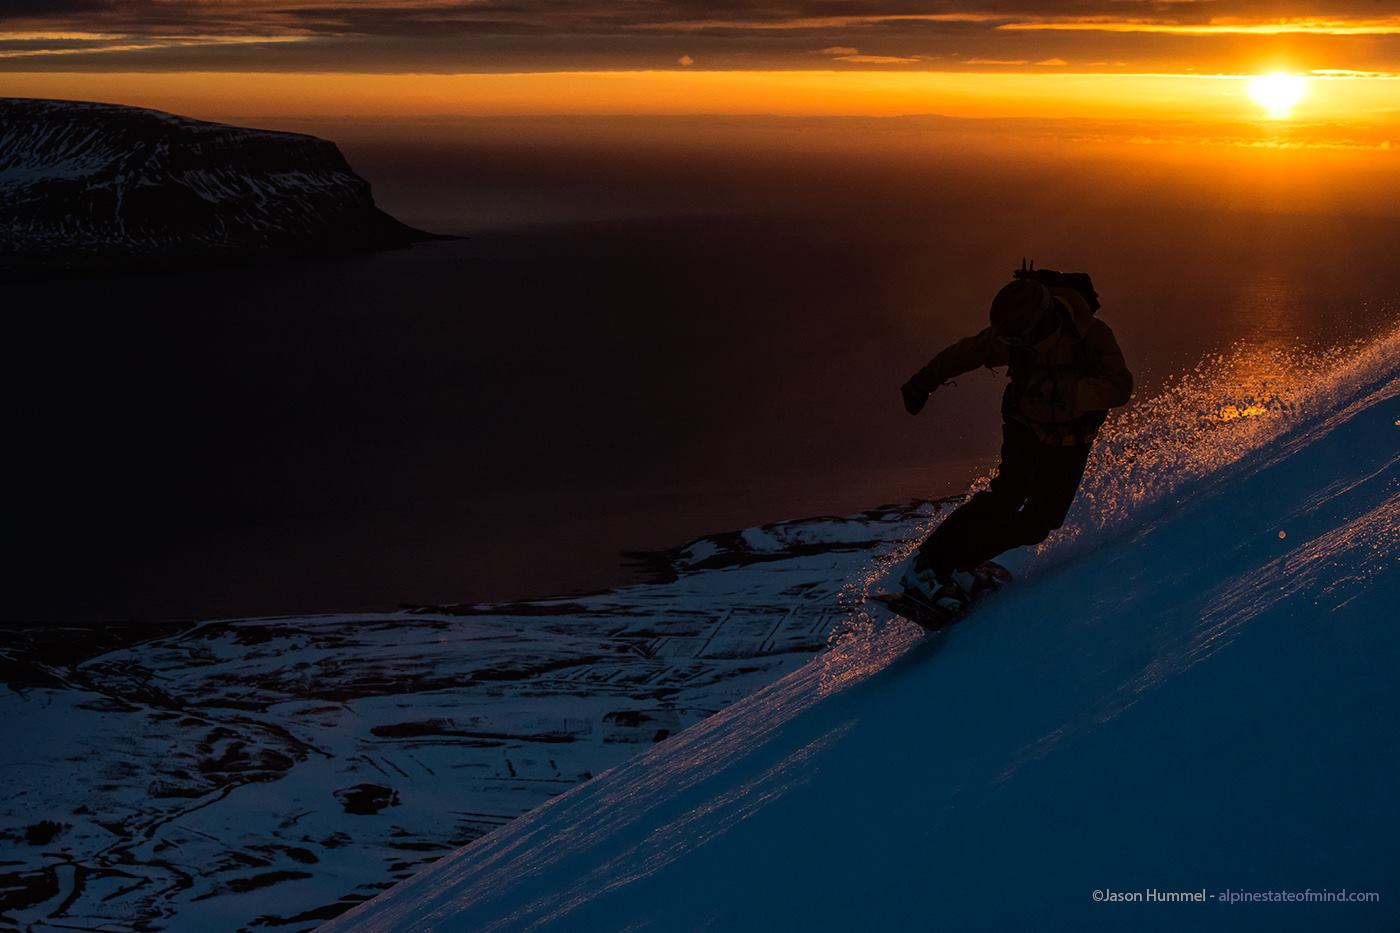 A epic snowboard shot while ski touring around Dýrafjörður in the Westfjords of Iceland